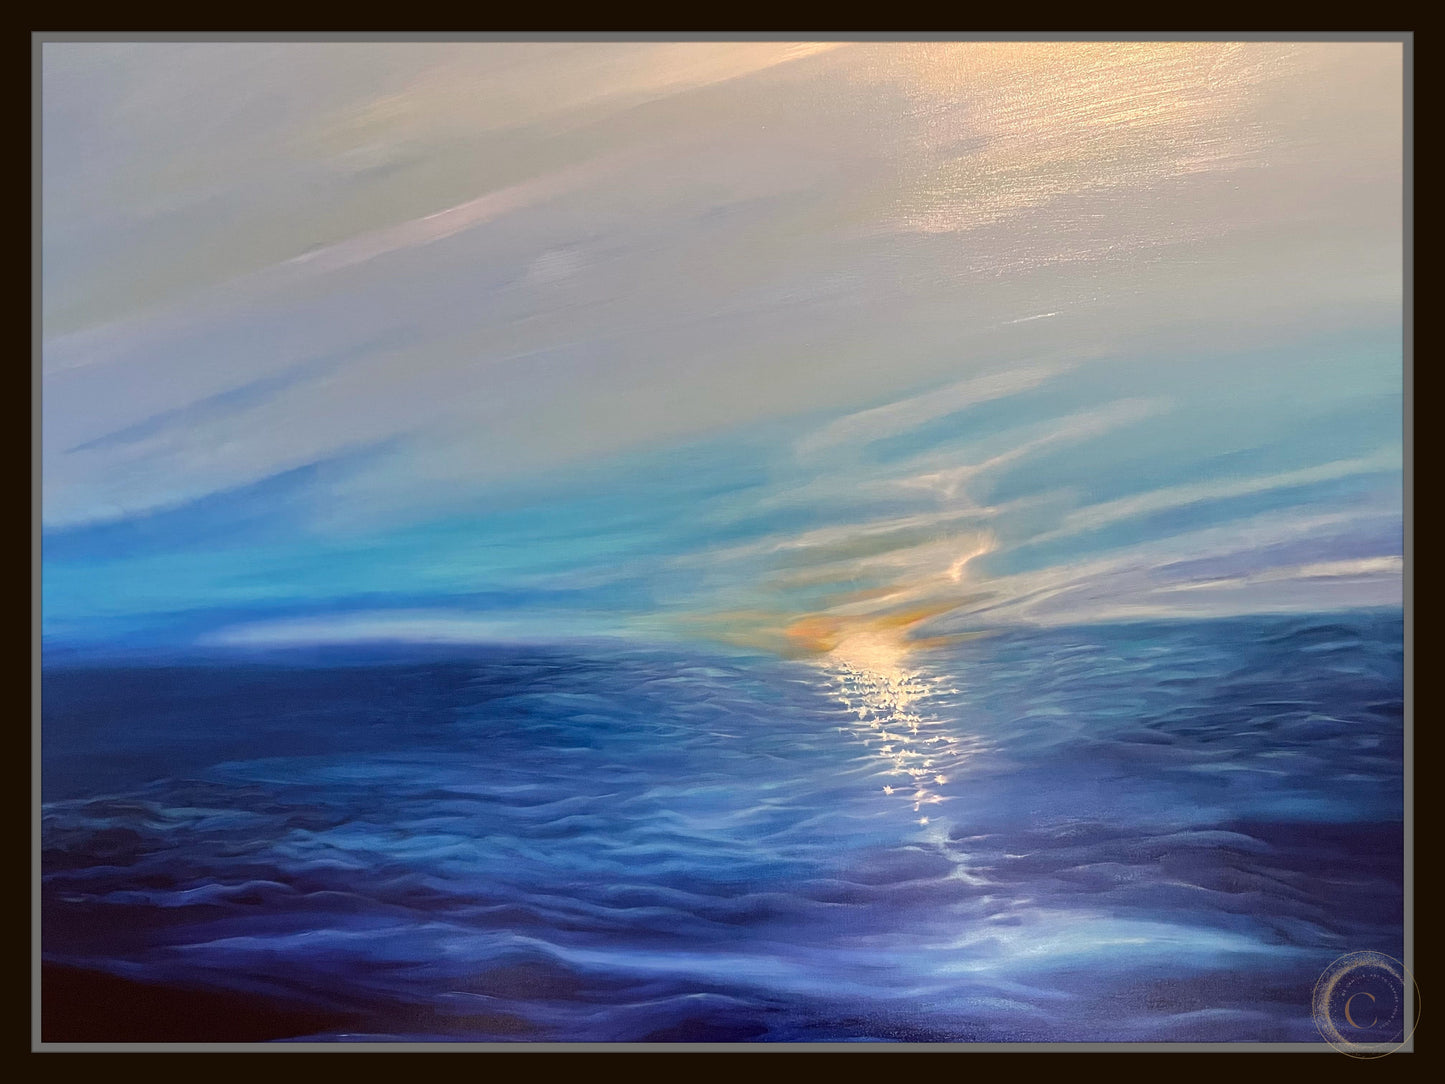 Ocean Bliss 2 Canvas Print